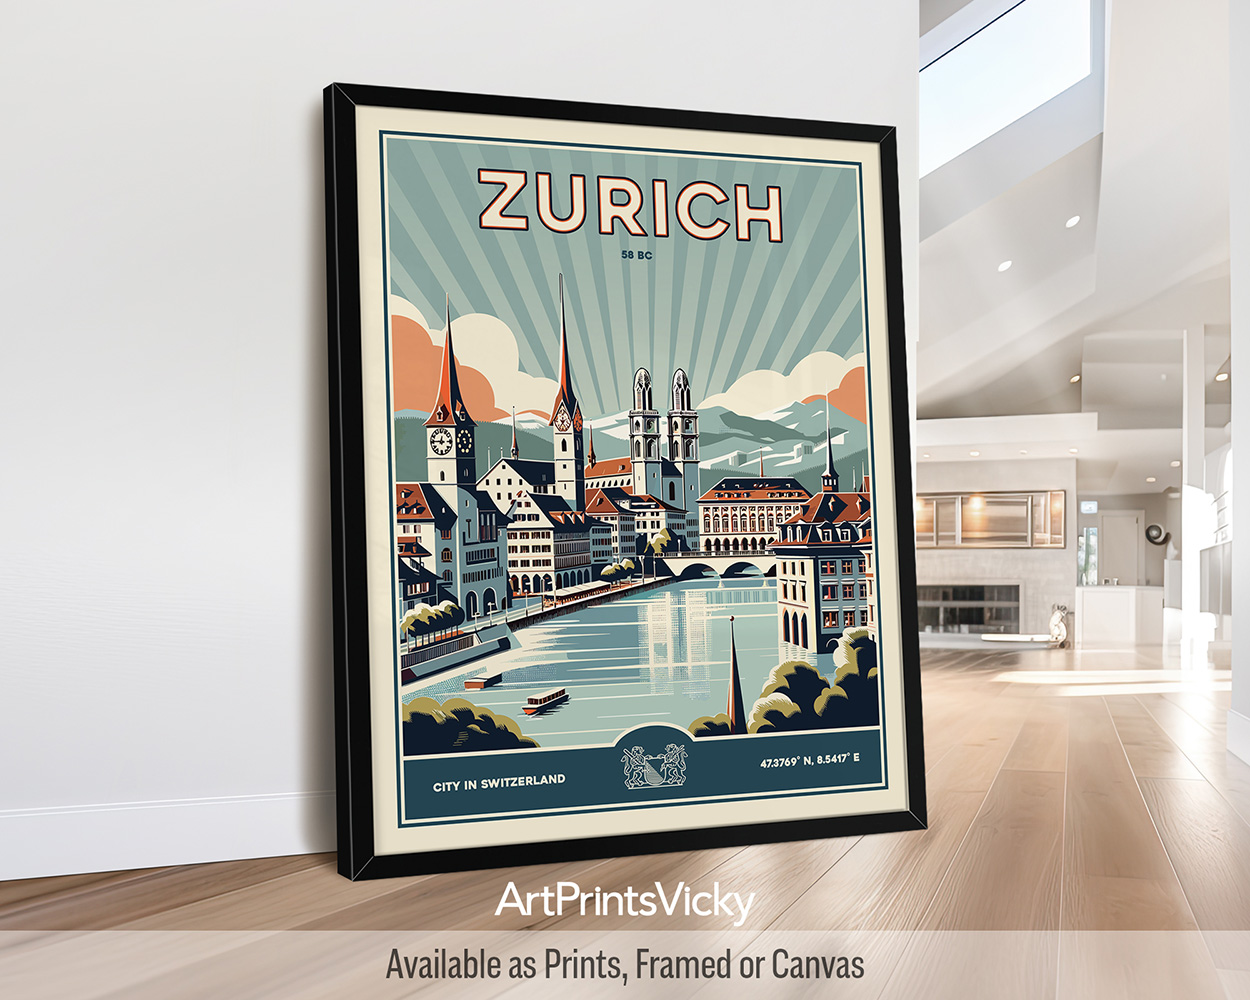 Zurich Poster Inspired by Retro Travel Art by ArtPrintsVicky